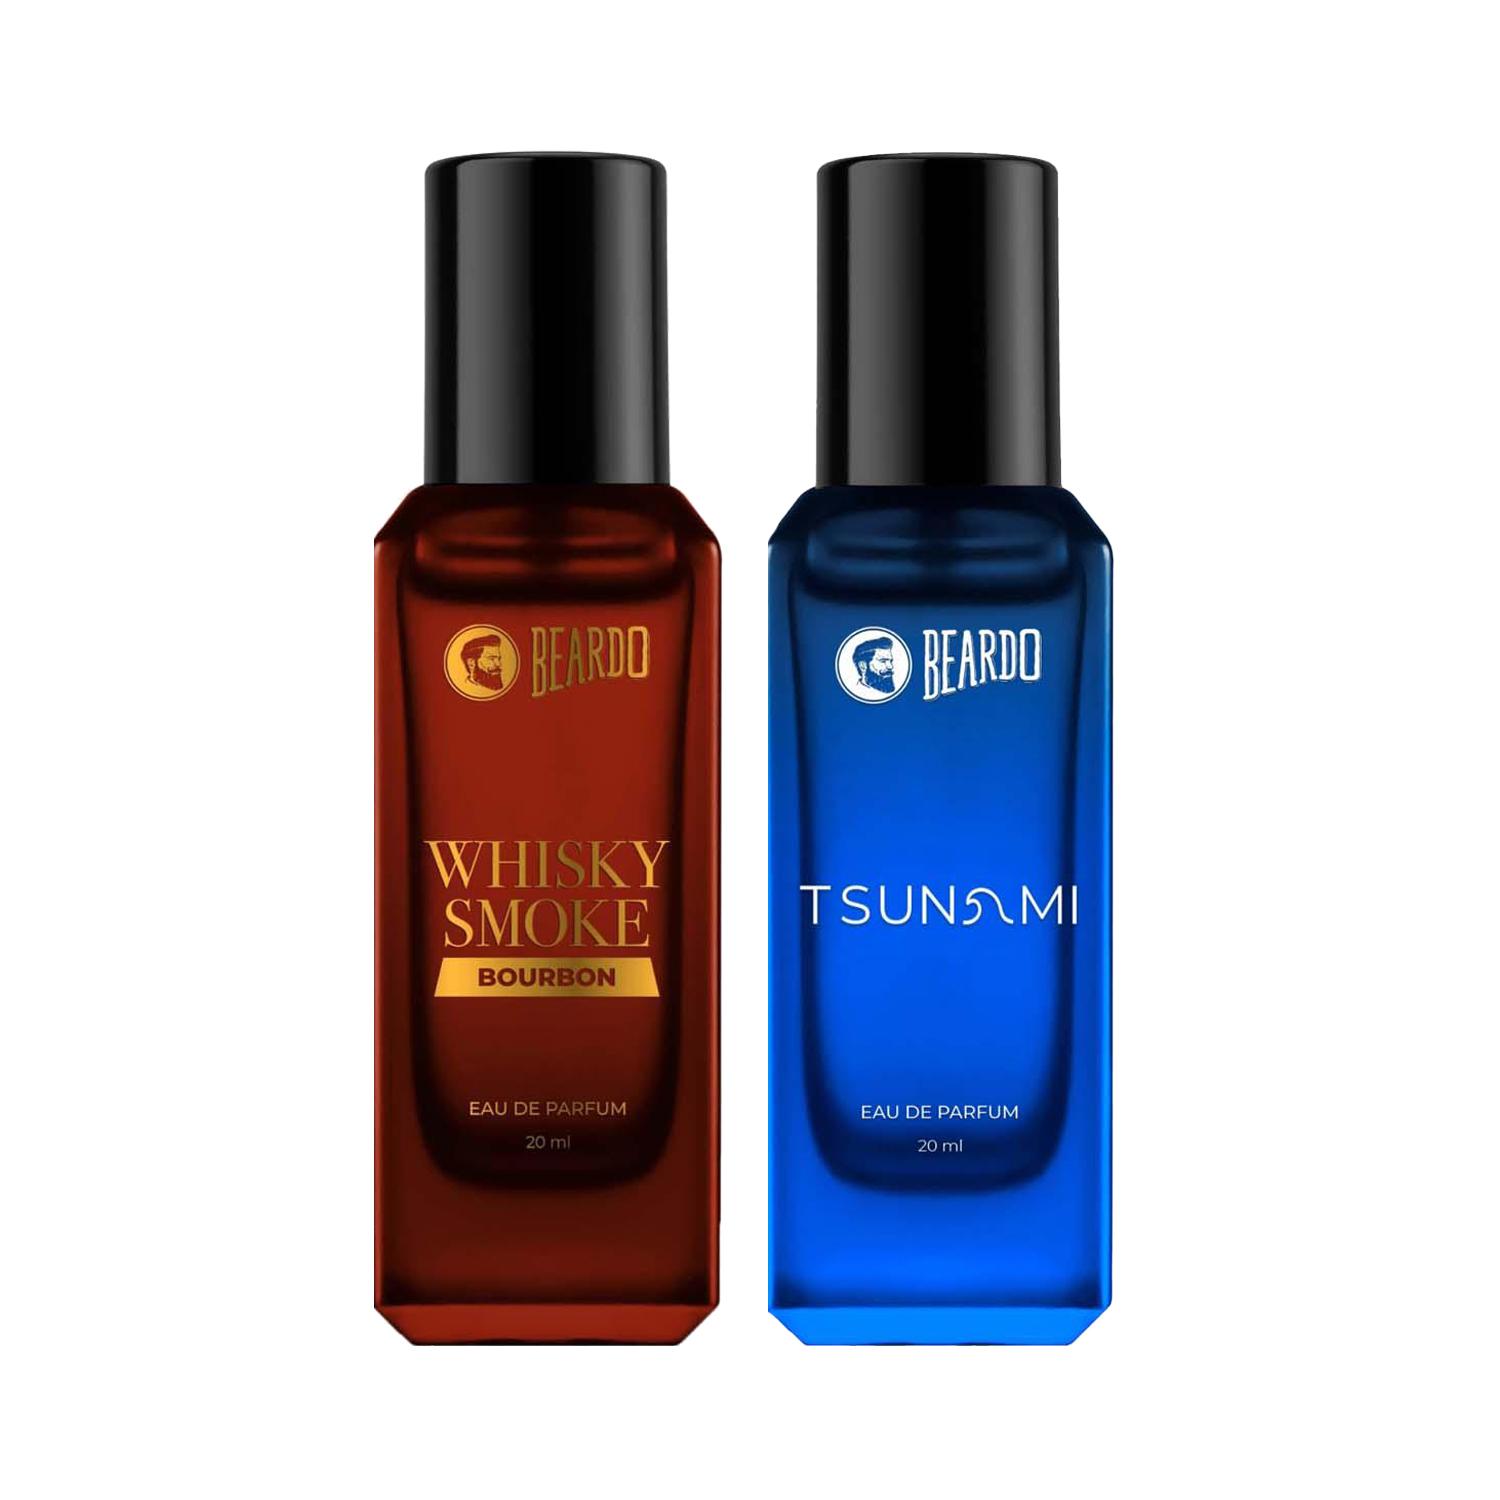 Beardo | Beardo Tsunami Perfume (20 ml) & Bourbon Whisky Smoke Perfume Ideal Gift (20 ml) Combo